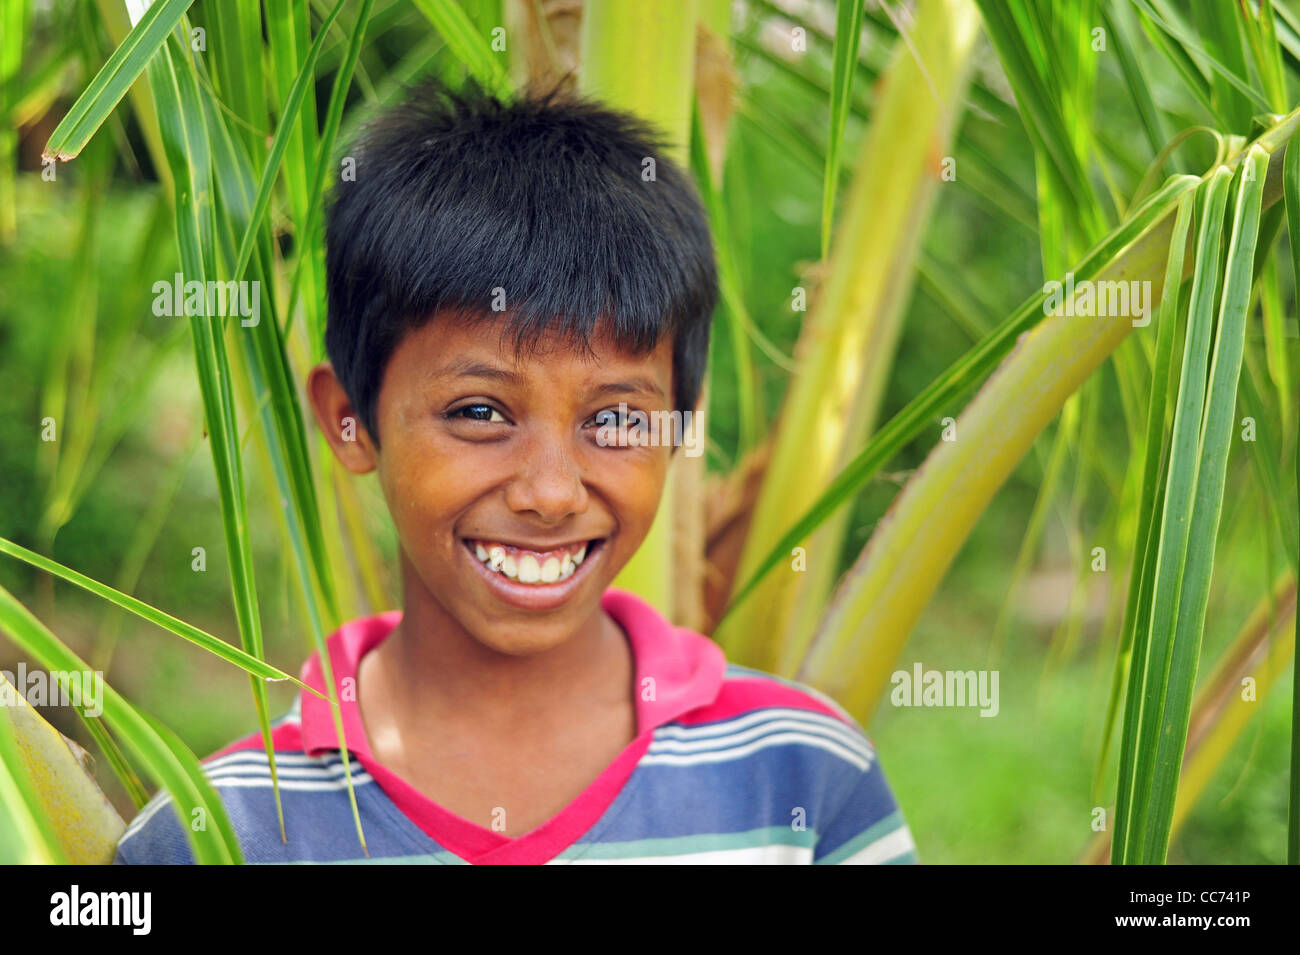 Indonesia, Sumatra, Banda Aceh, portrait of young boy amidst green vegetation Stock Photo